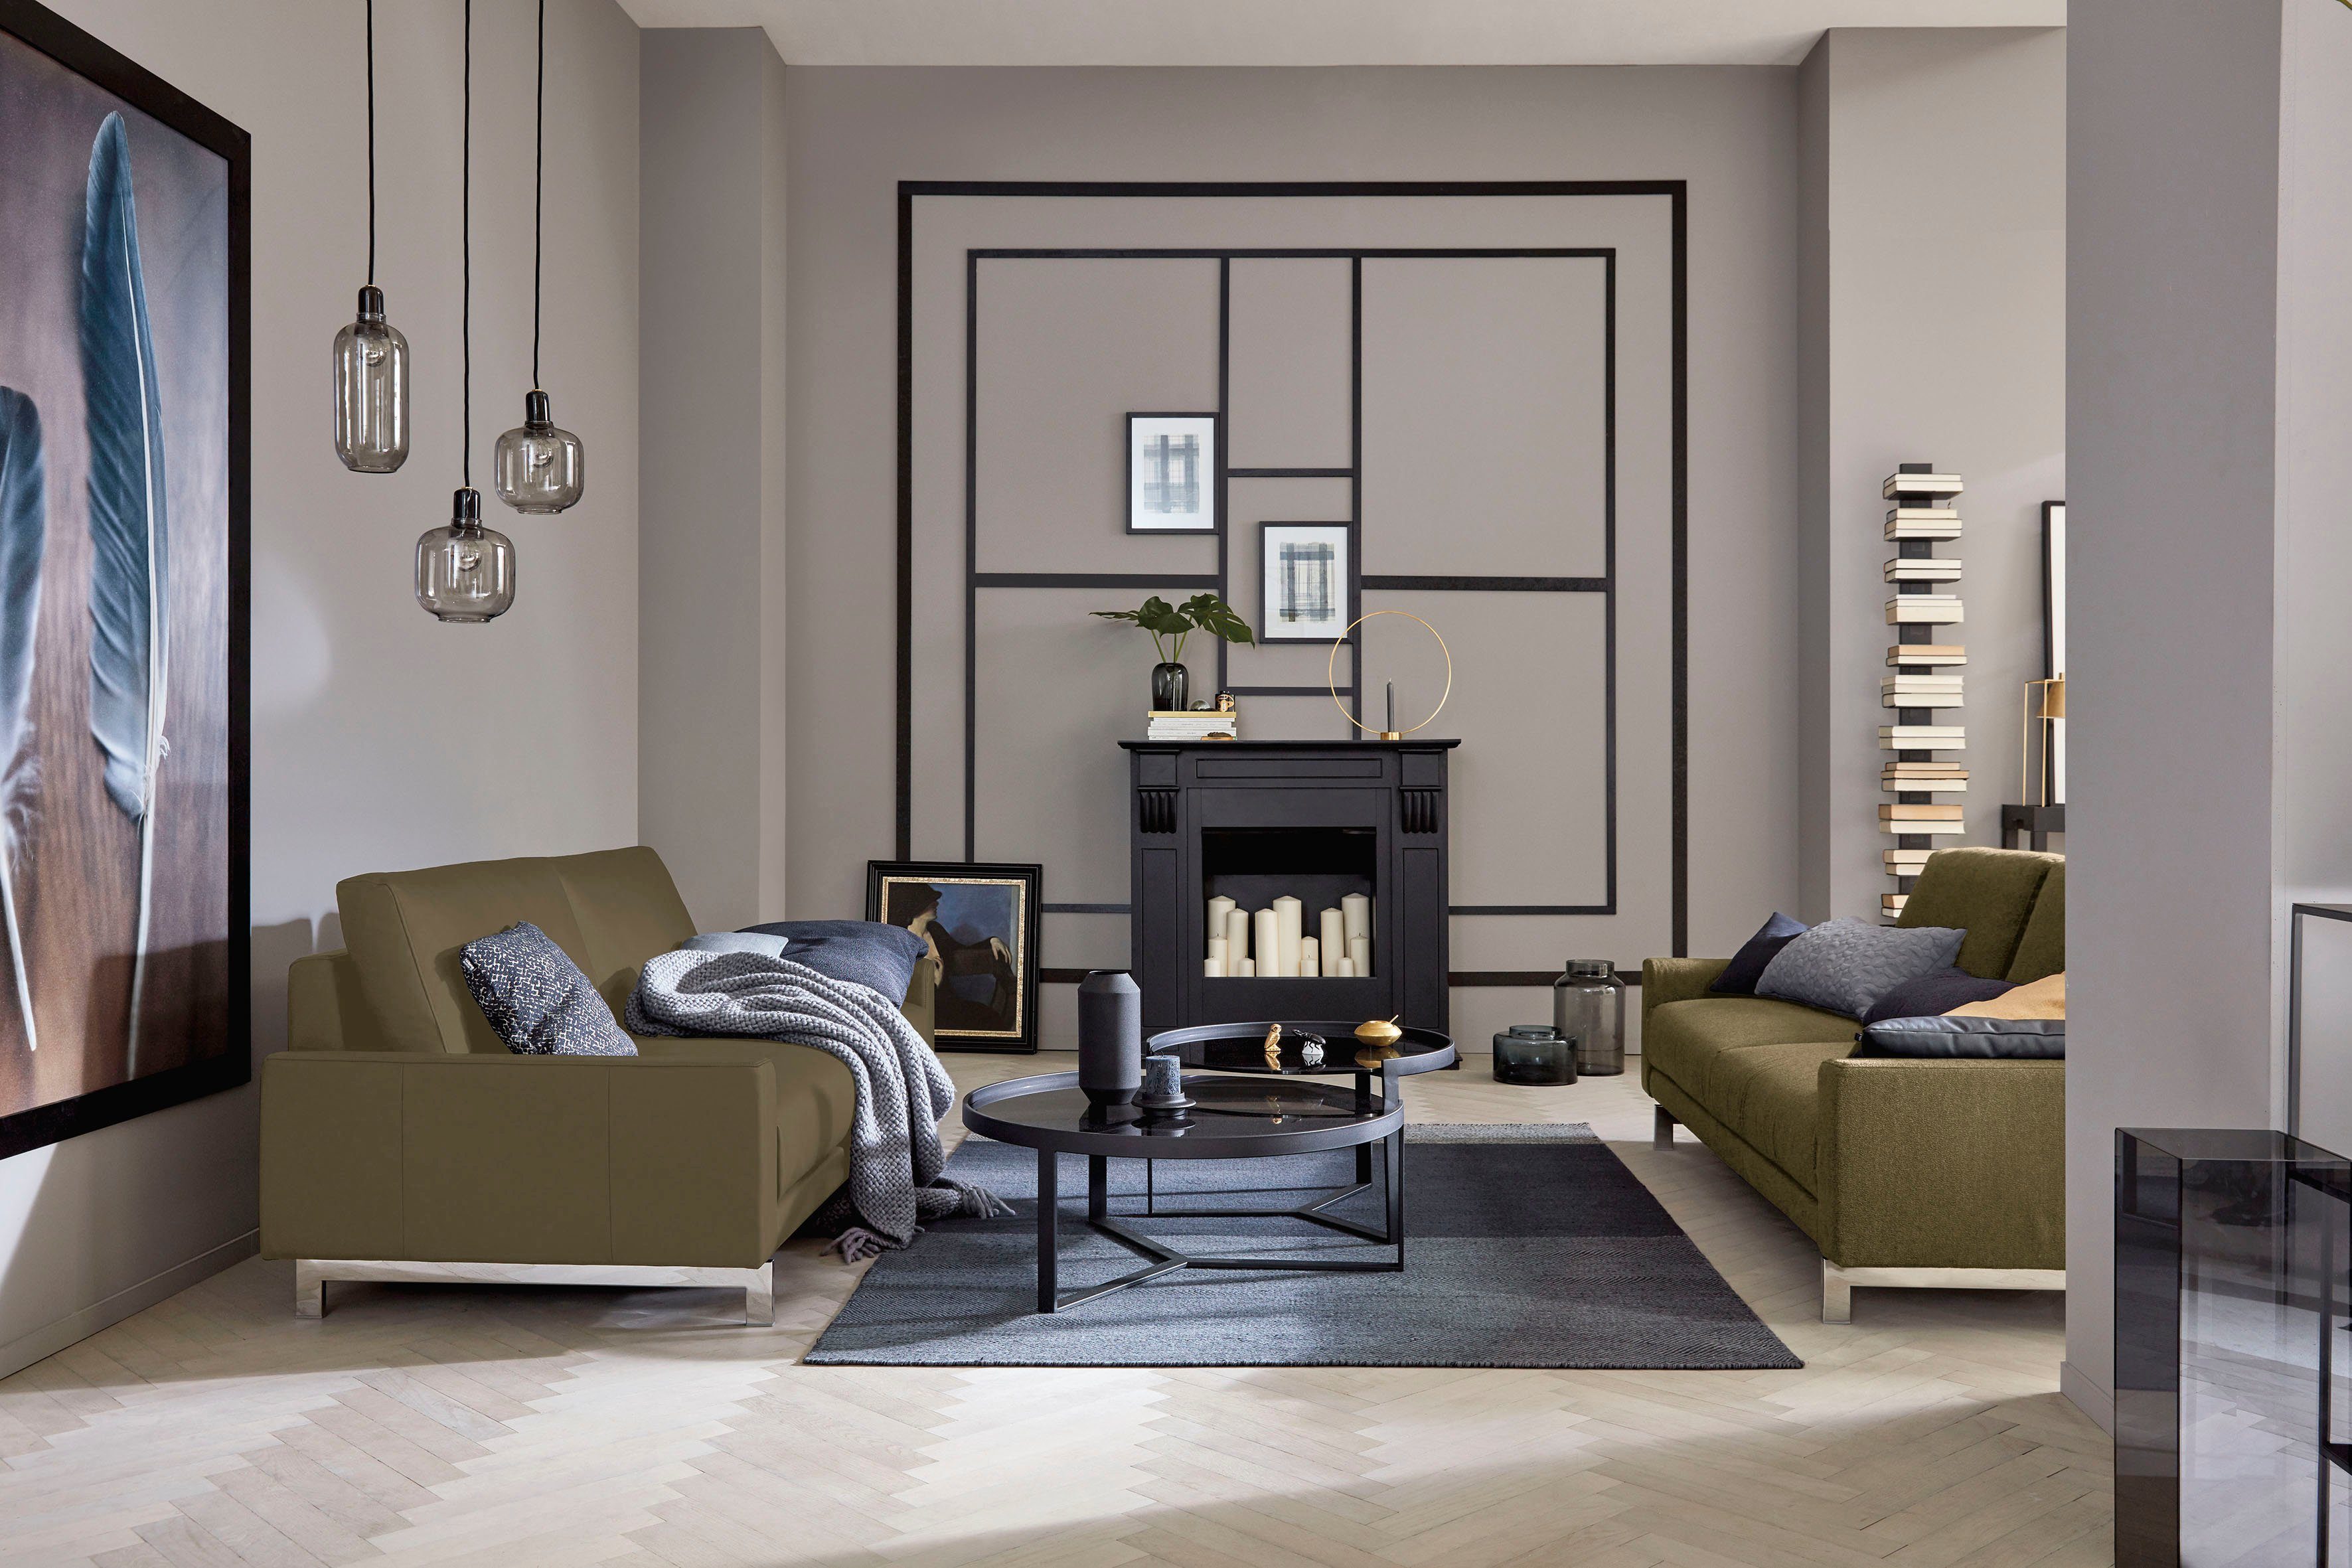 2-Sitzer Armlehne sofa chromfarben cm glänzend, niedrig, Fuß 164 Breite hs.450, hülsta